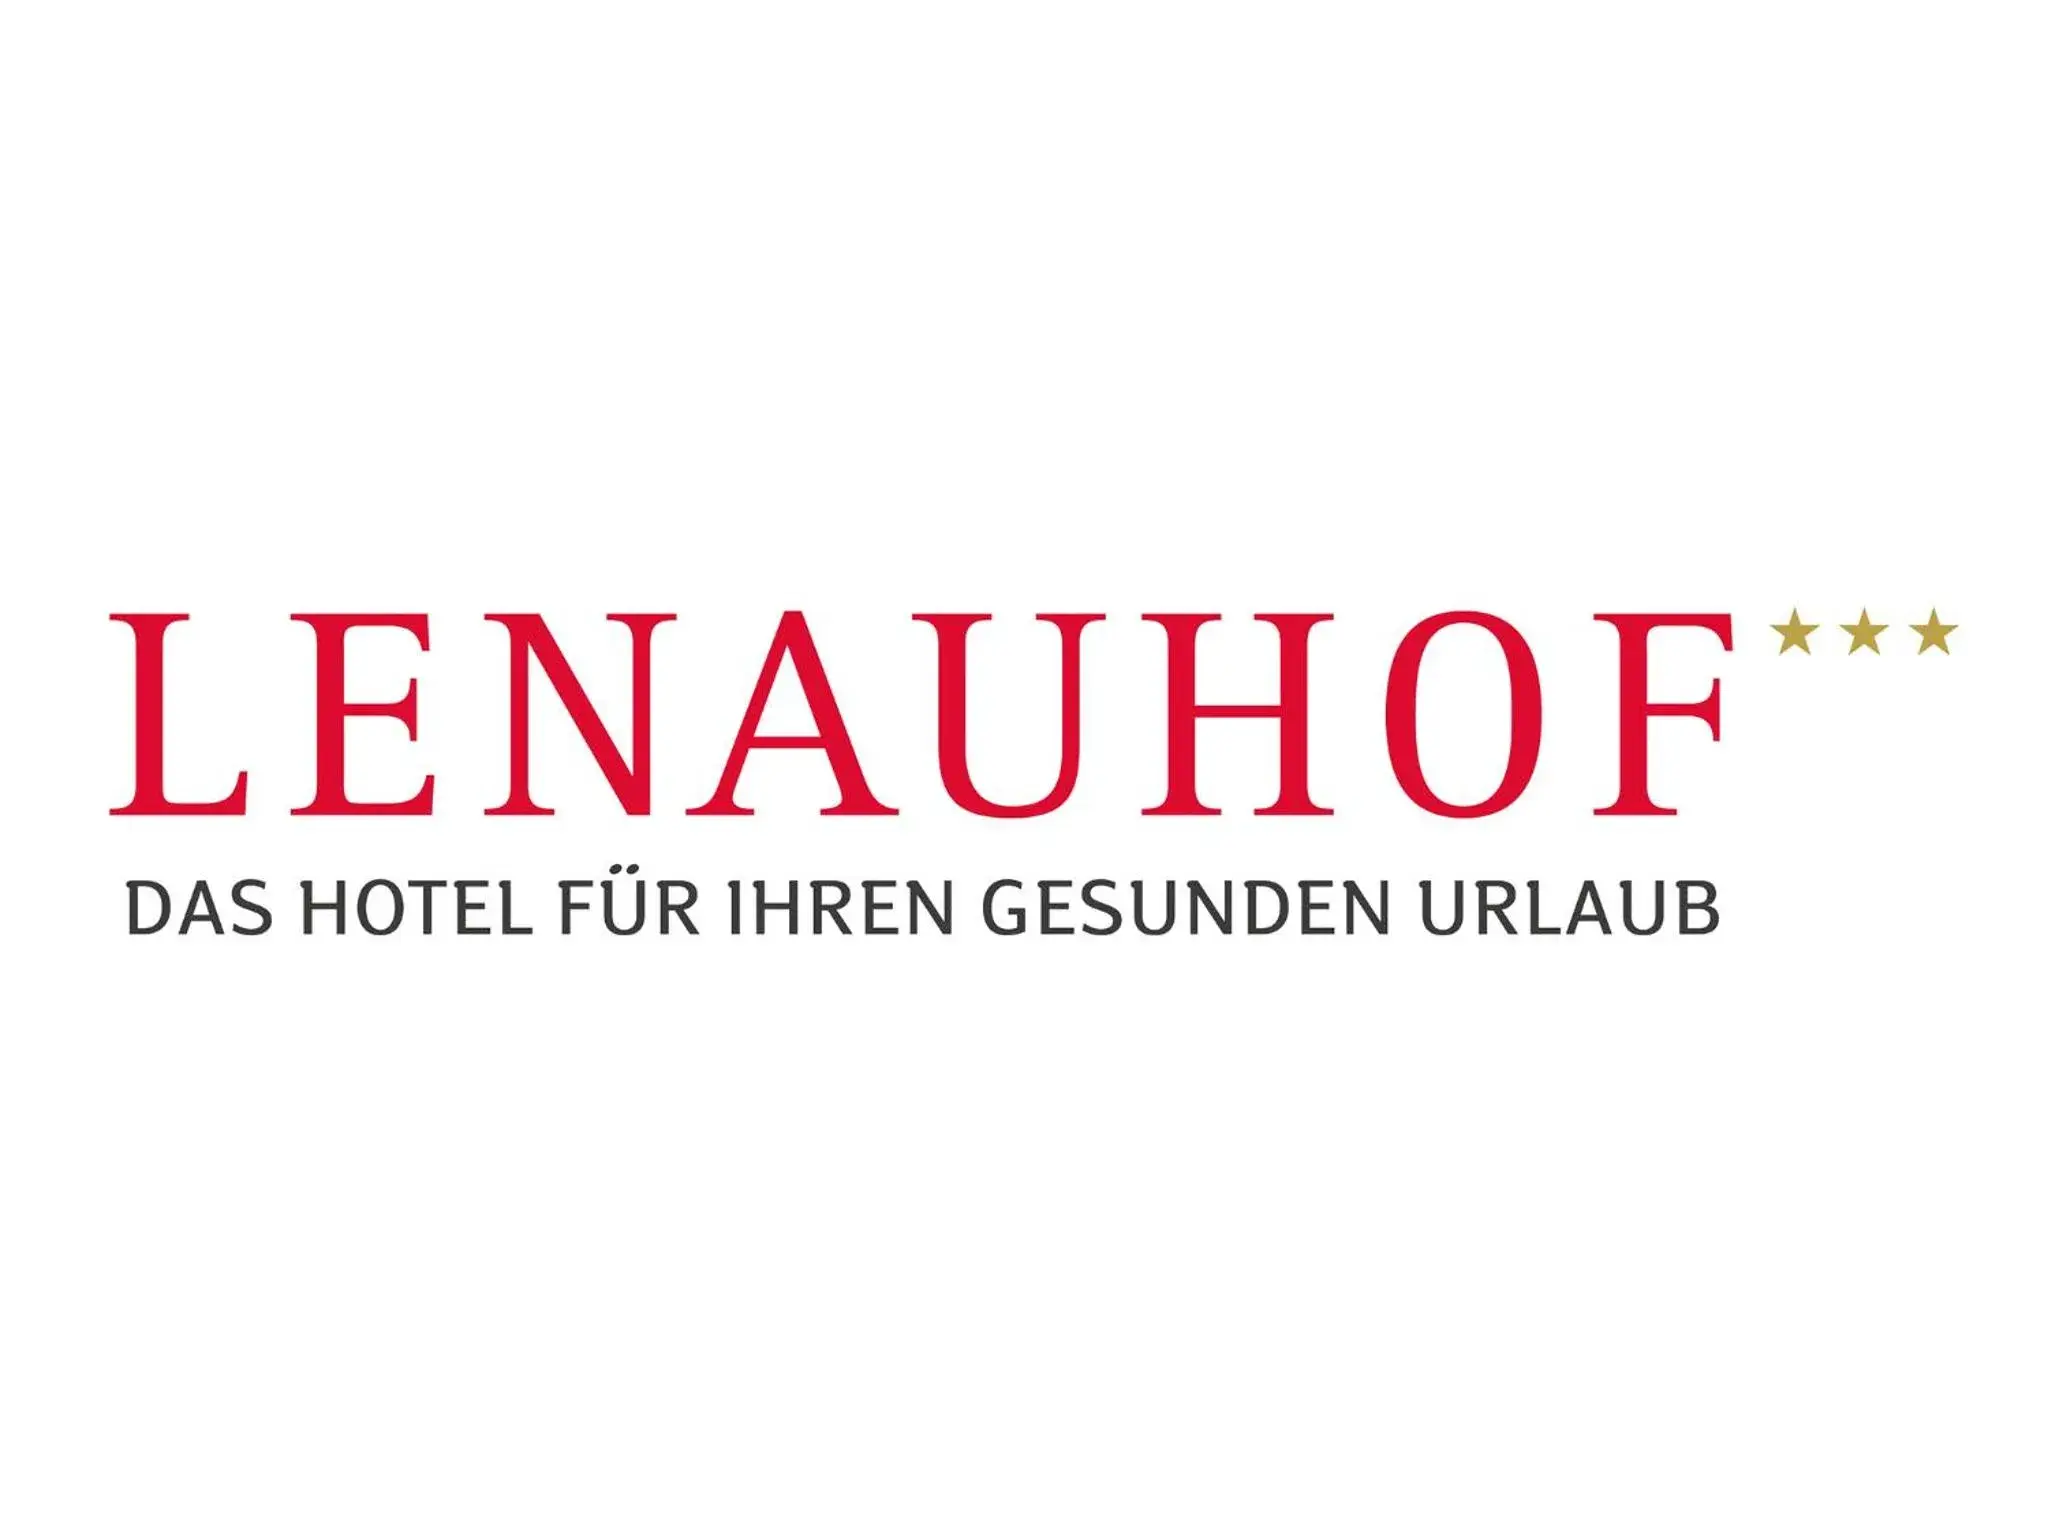 Property logo or sign in Hotel Lenauhof